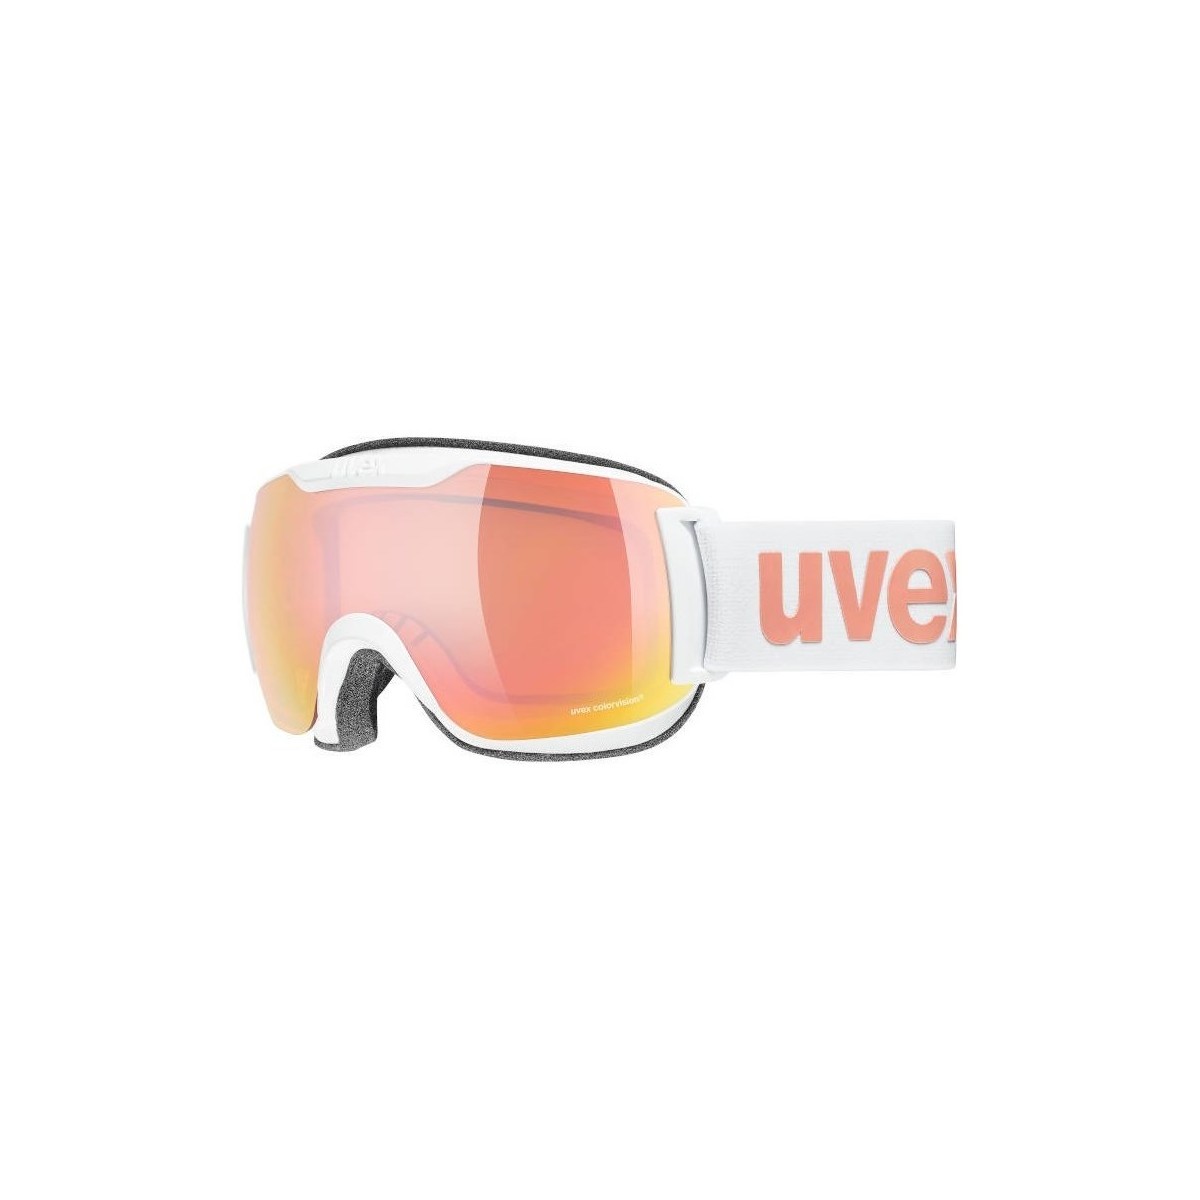 Doplnky Športové doplnky Uvex Downhill 2000 S CV 1030 2021 Biela, Ružová